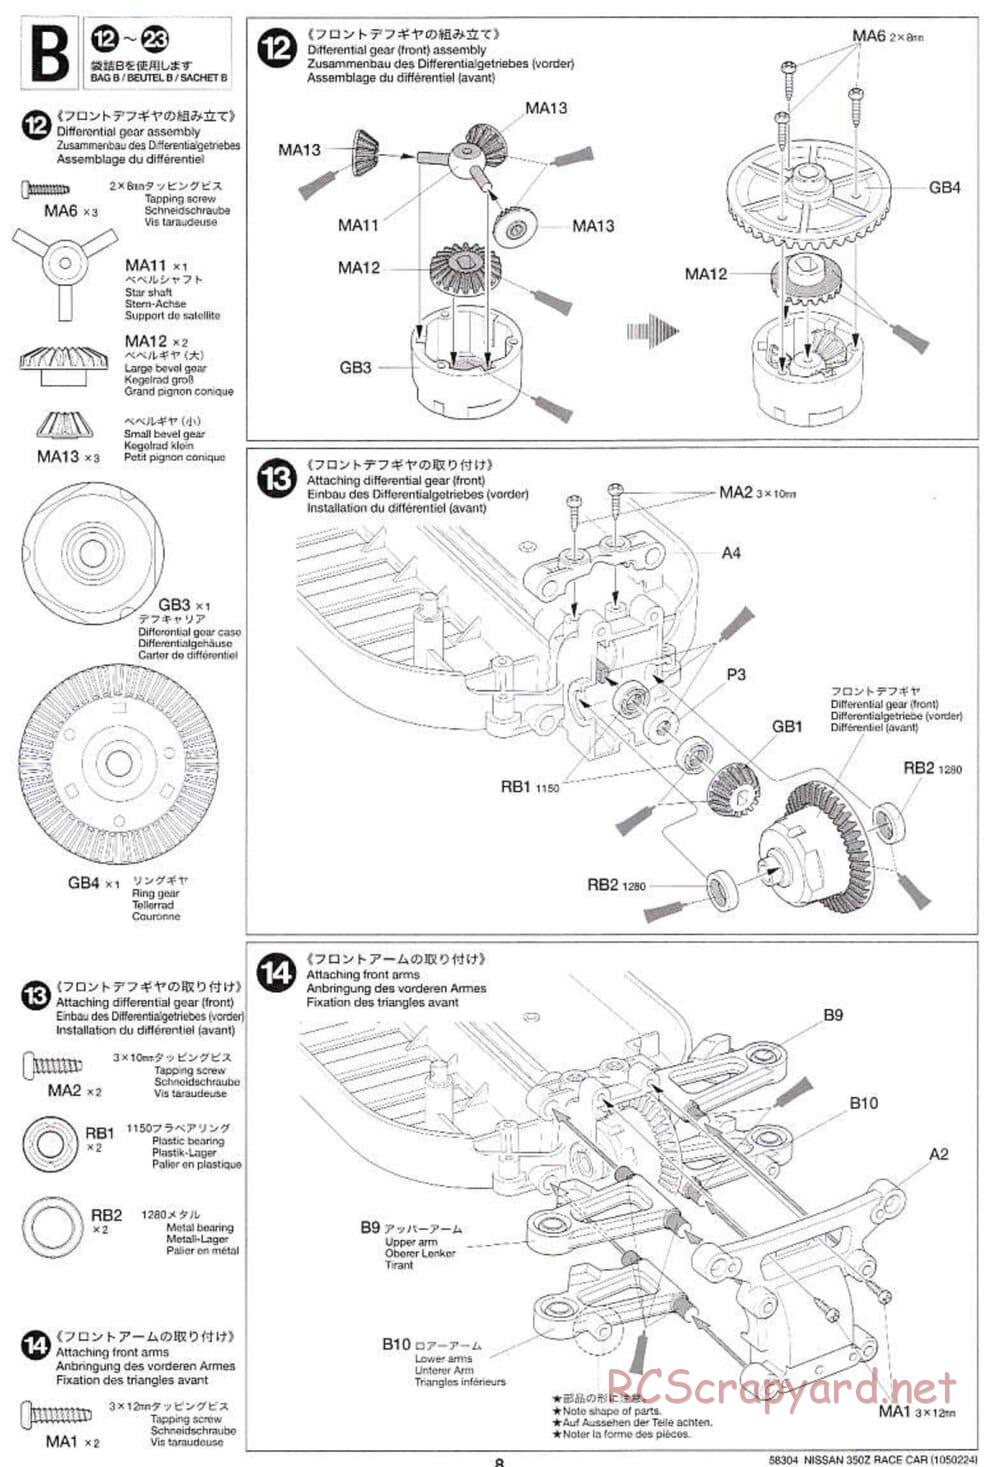 Tamiya - Nissan 350Z Race-Car - TT-01 Chassis - Manual - Page 8